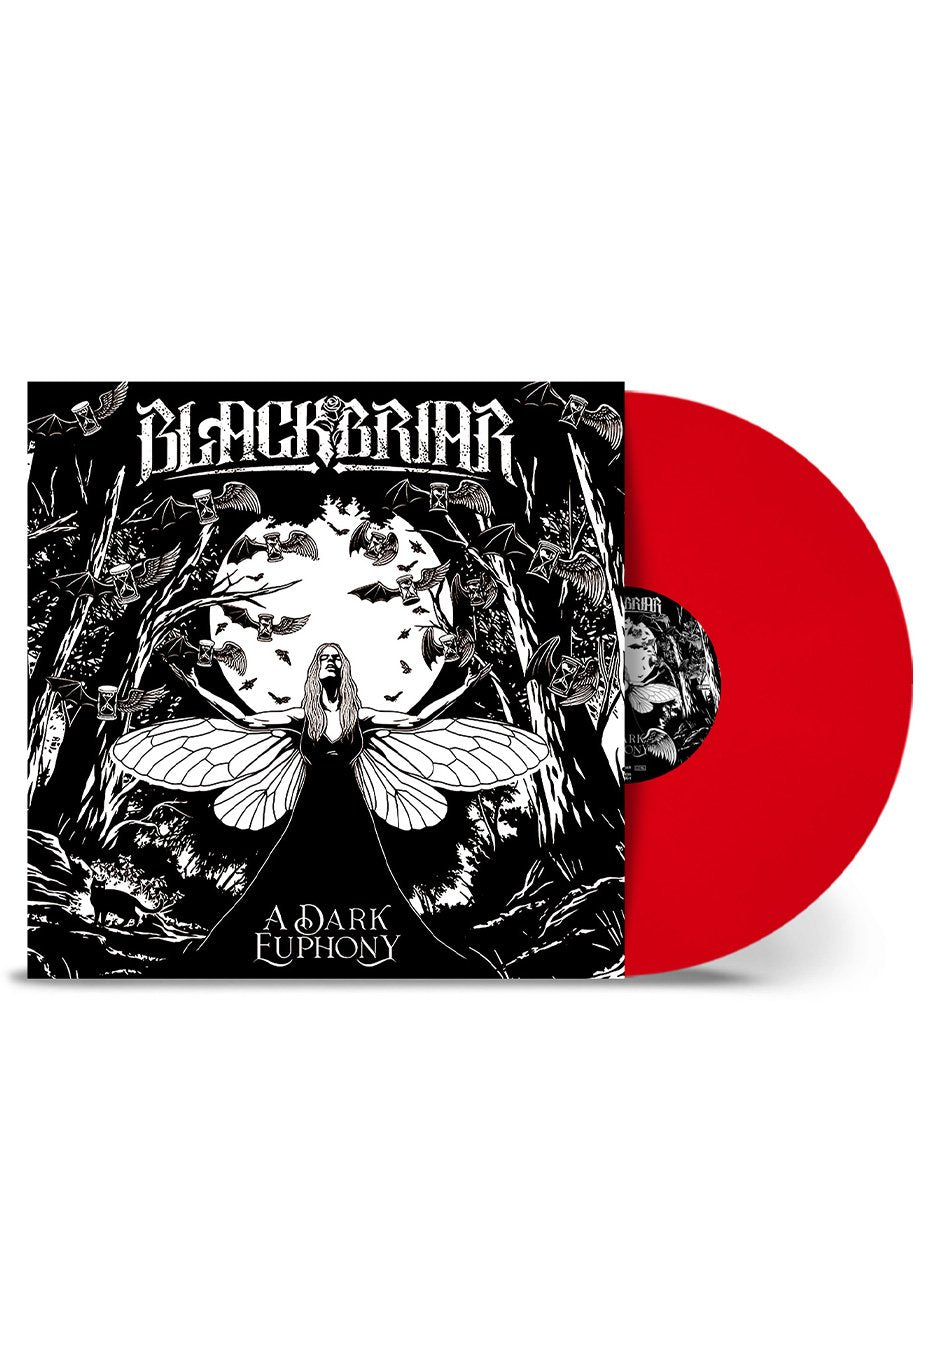 Blackbriar - A Dark Euphony Ltd. Transparent Red - Colored Vinyl